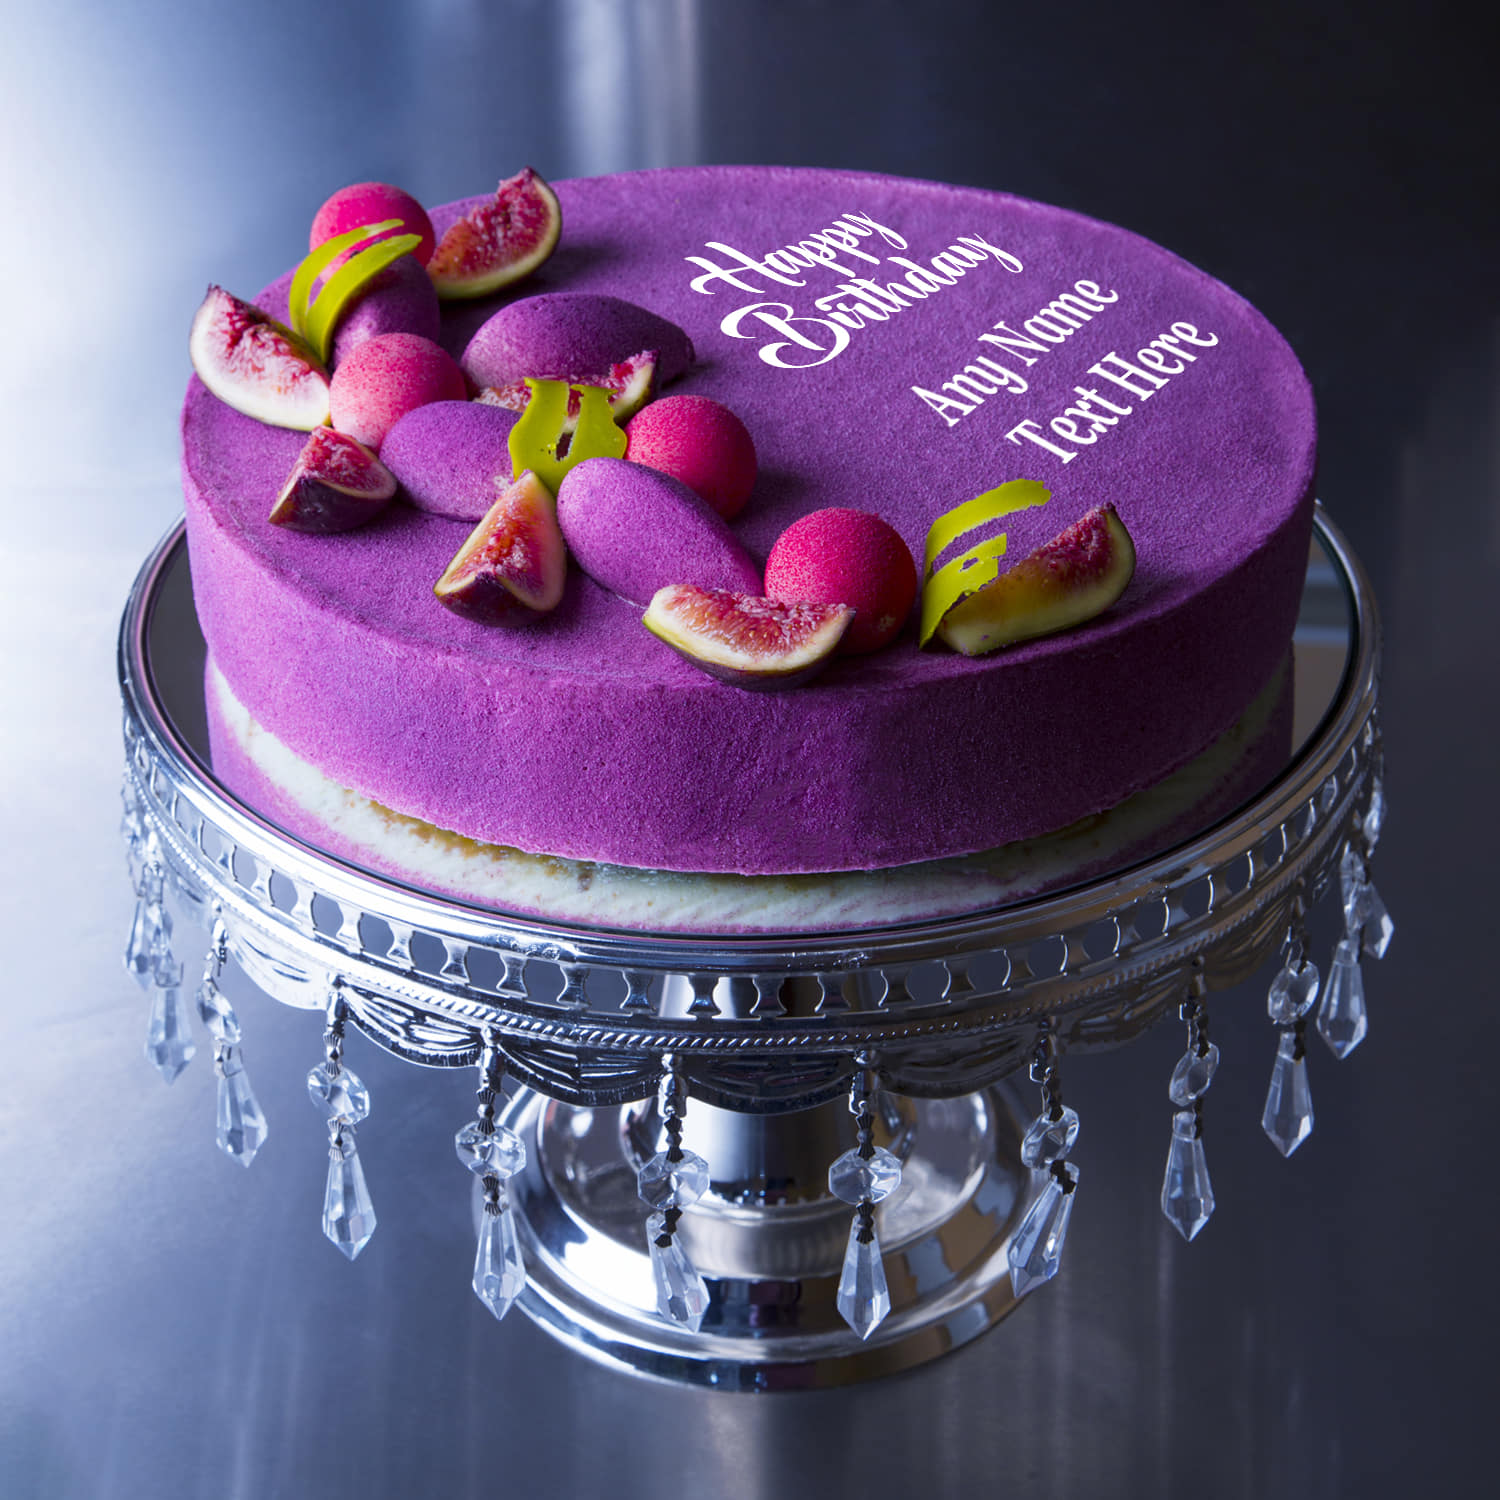 Kids' Cakes | LenJo Bakes | wedding cakes desserts